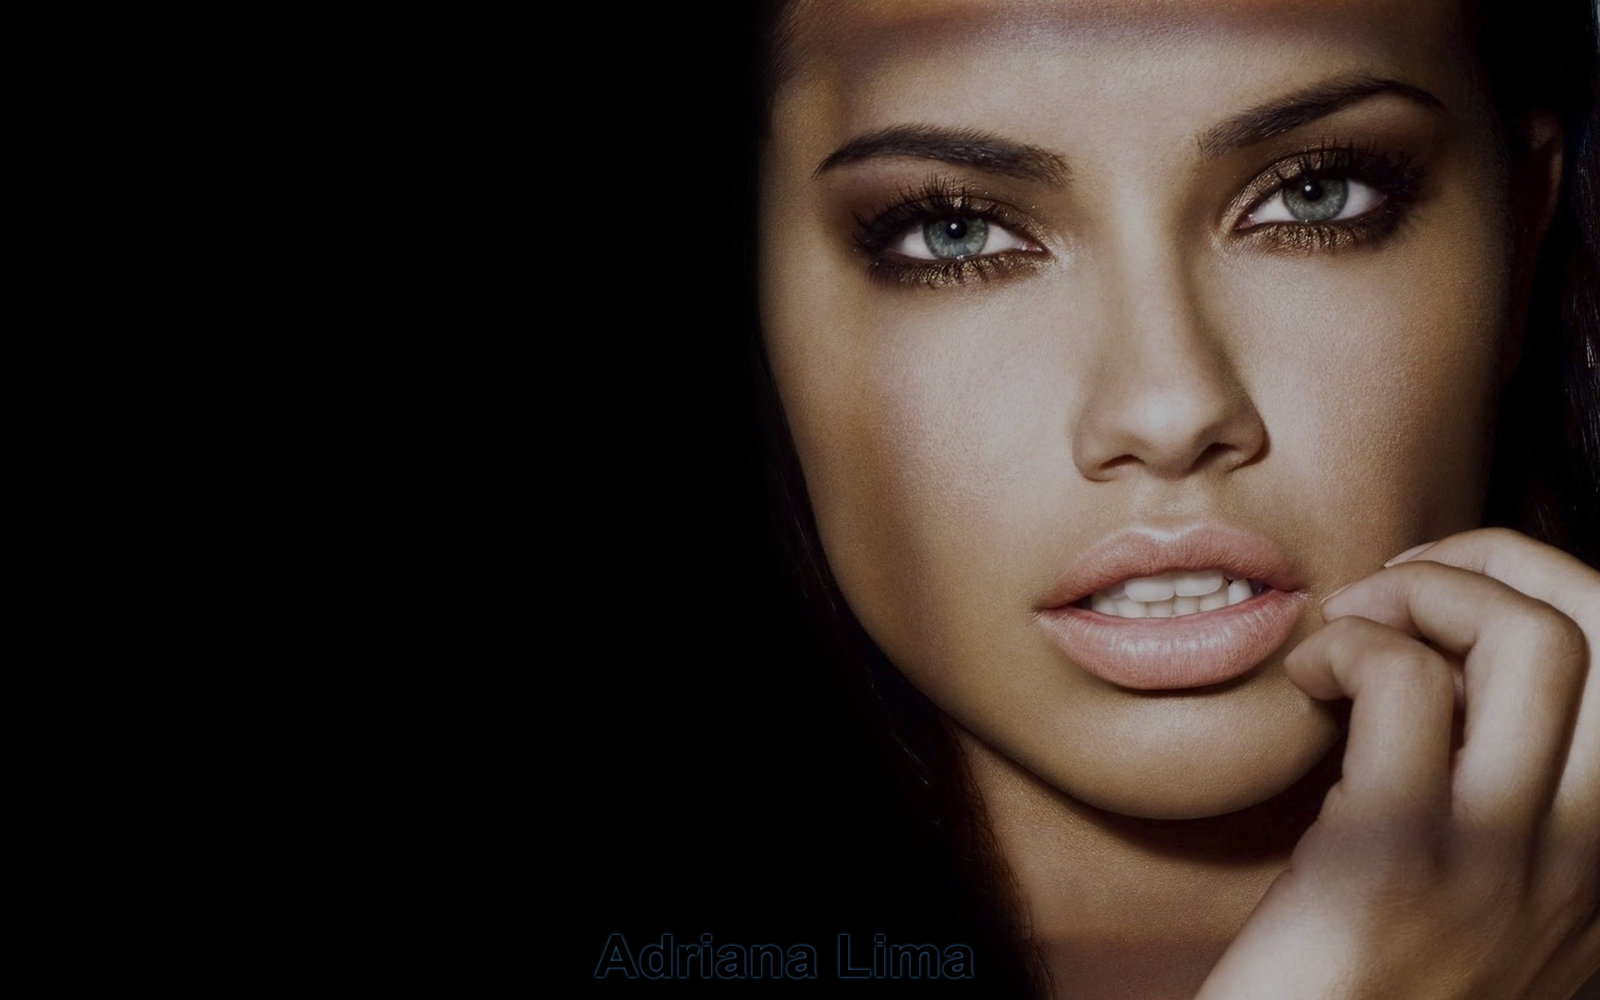 Adriana Lima Wallpaper HD by Balhirath on